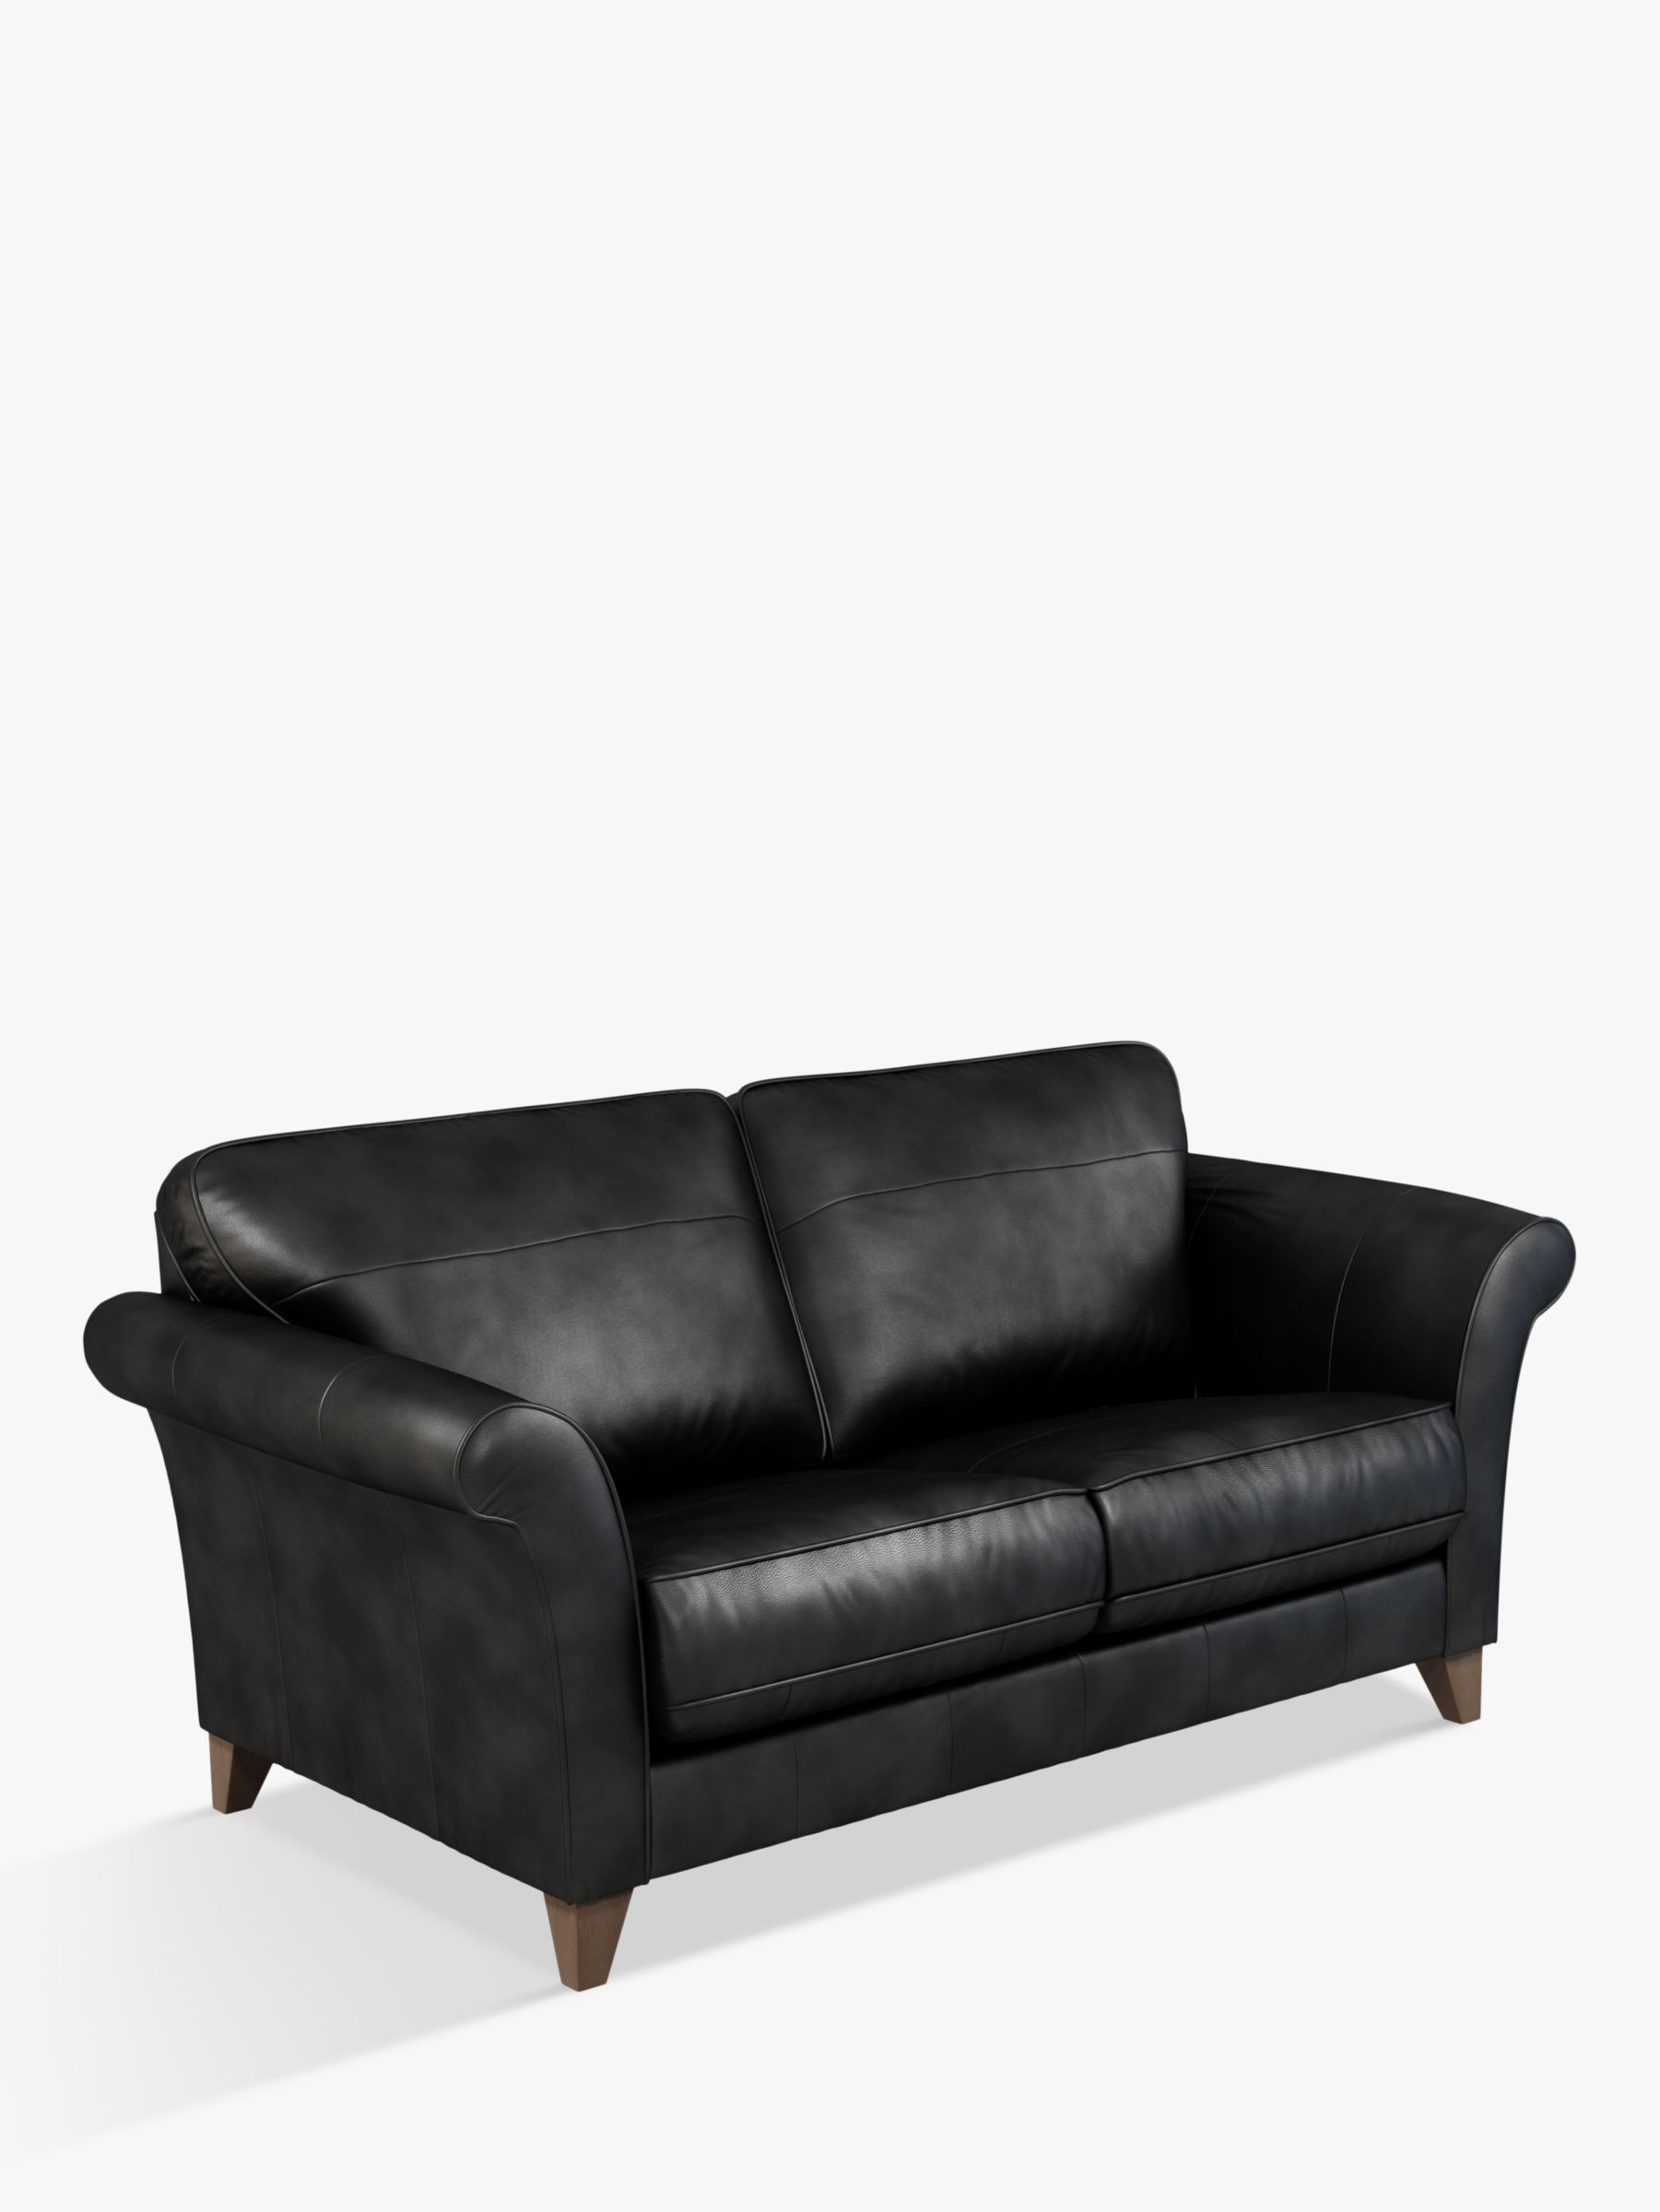 Photo of John lewis charlotte large 3 seater leather sofa dark leg